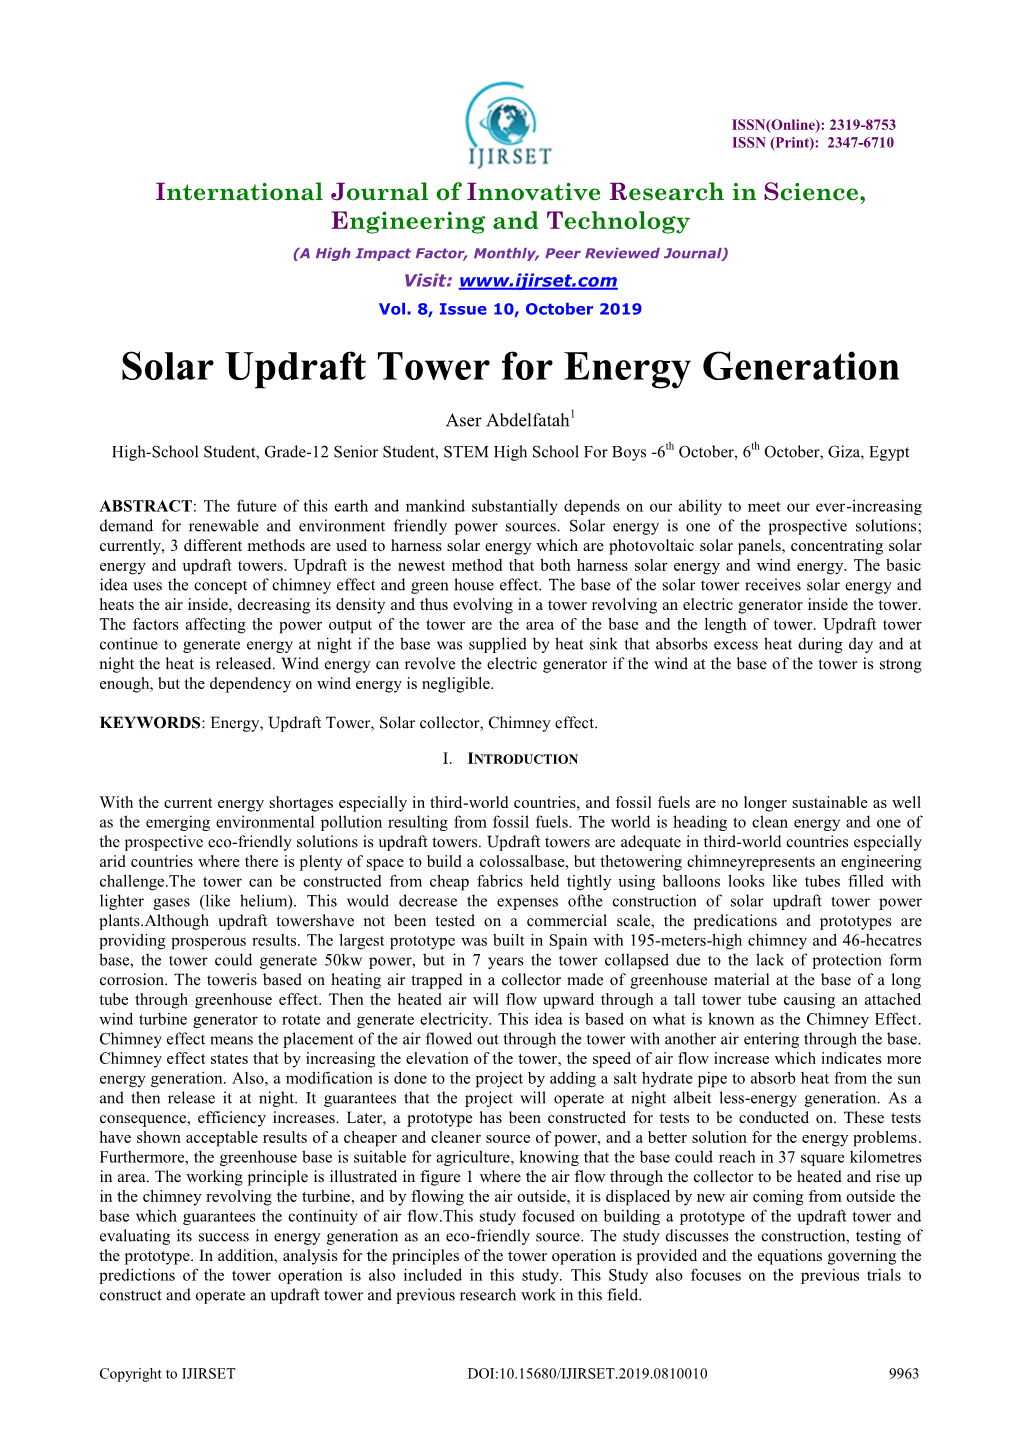 Solar Updraft Tower for Energy Generation